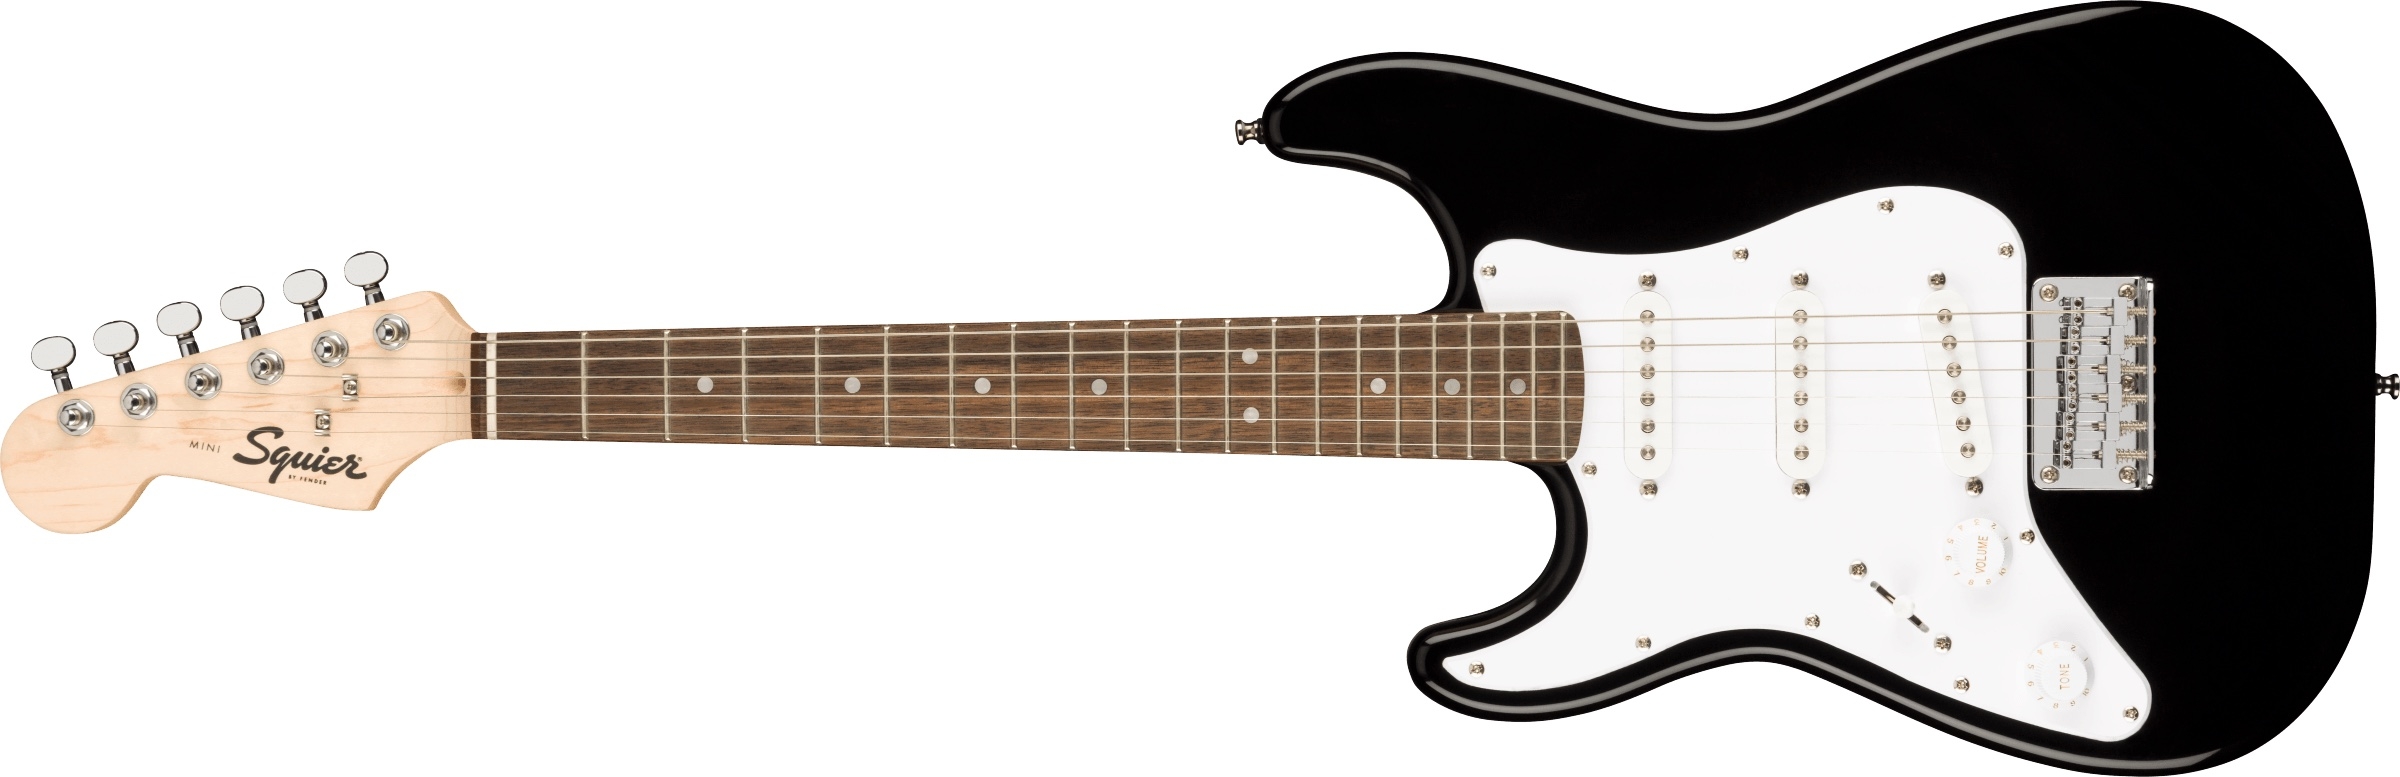 Squier Mini Stratocaster Left-Handed Kids Guitar Black - Guitar.co.uk